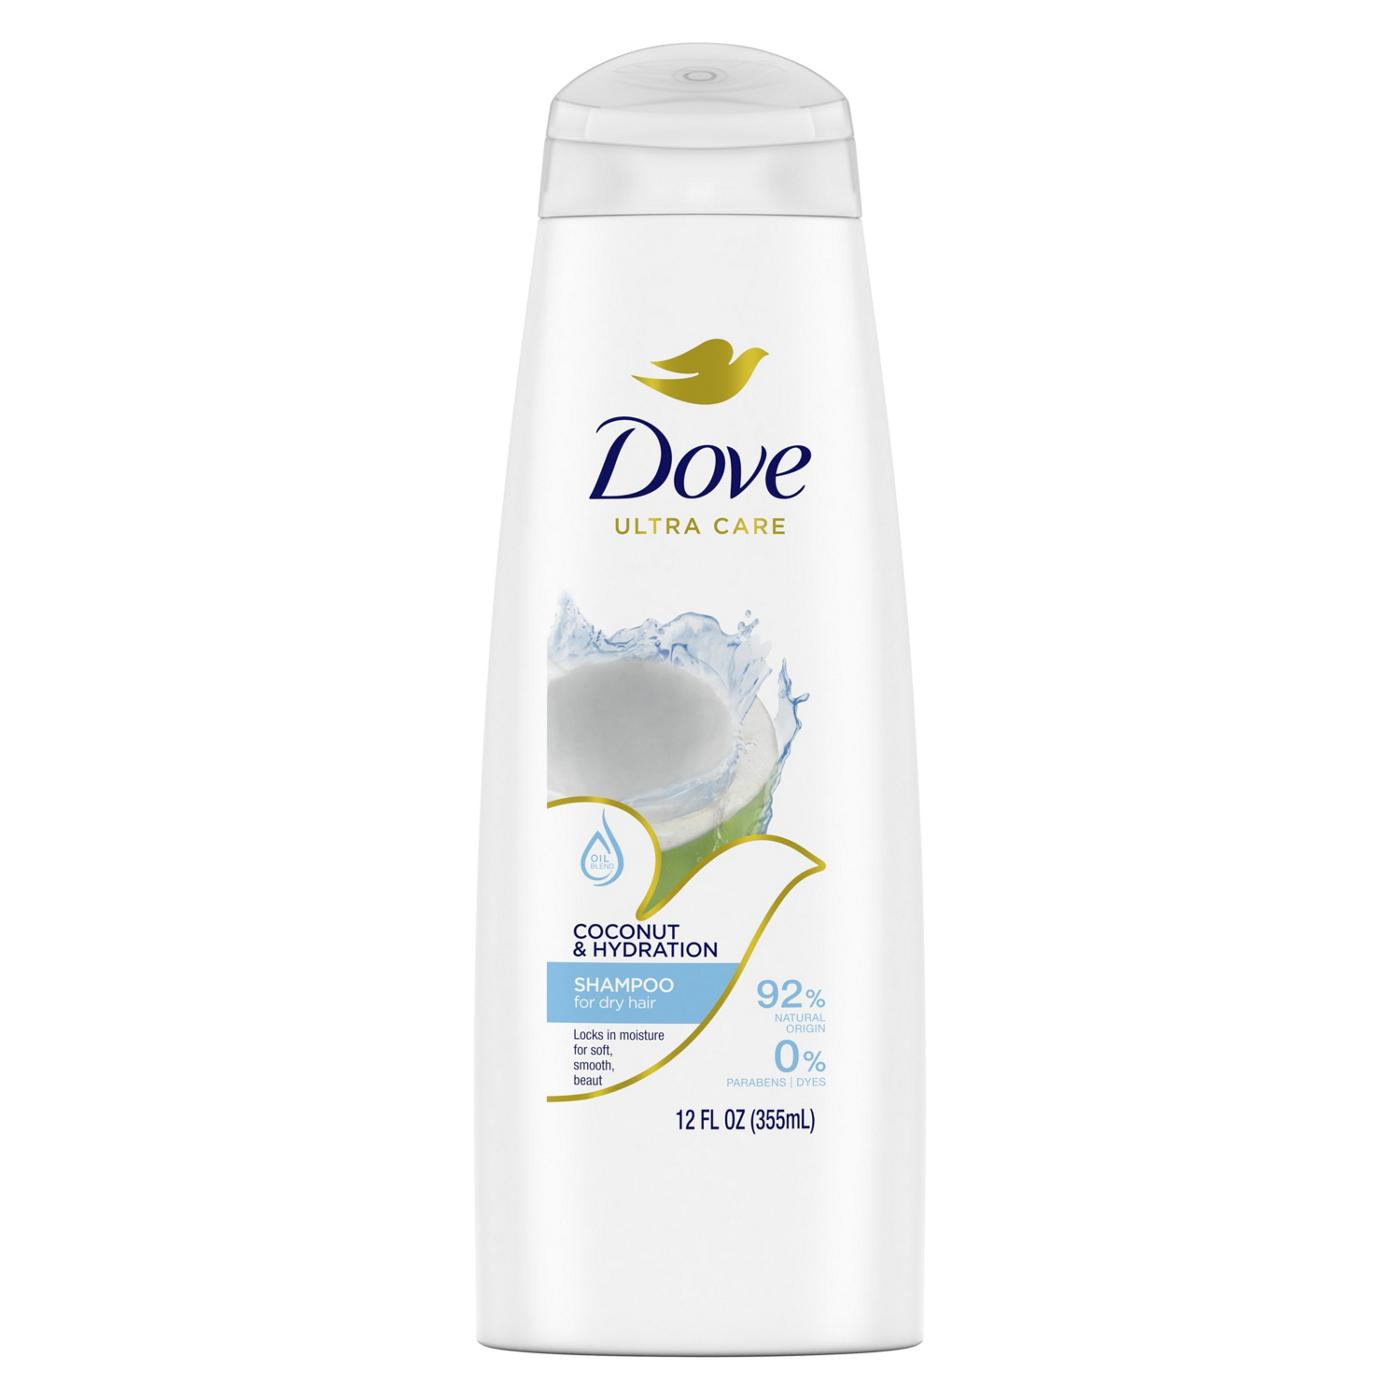 Dove Ultra Care Shampoo - Coconut & Hydration; image 1 of 11